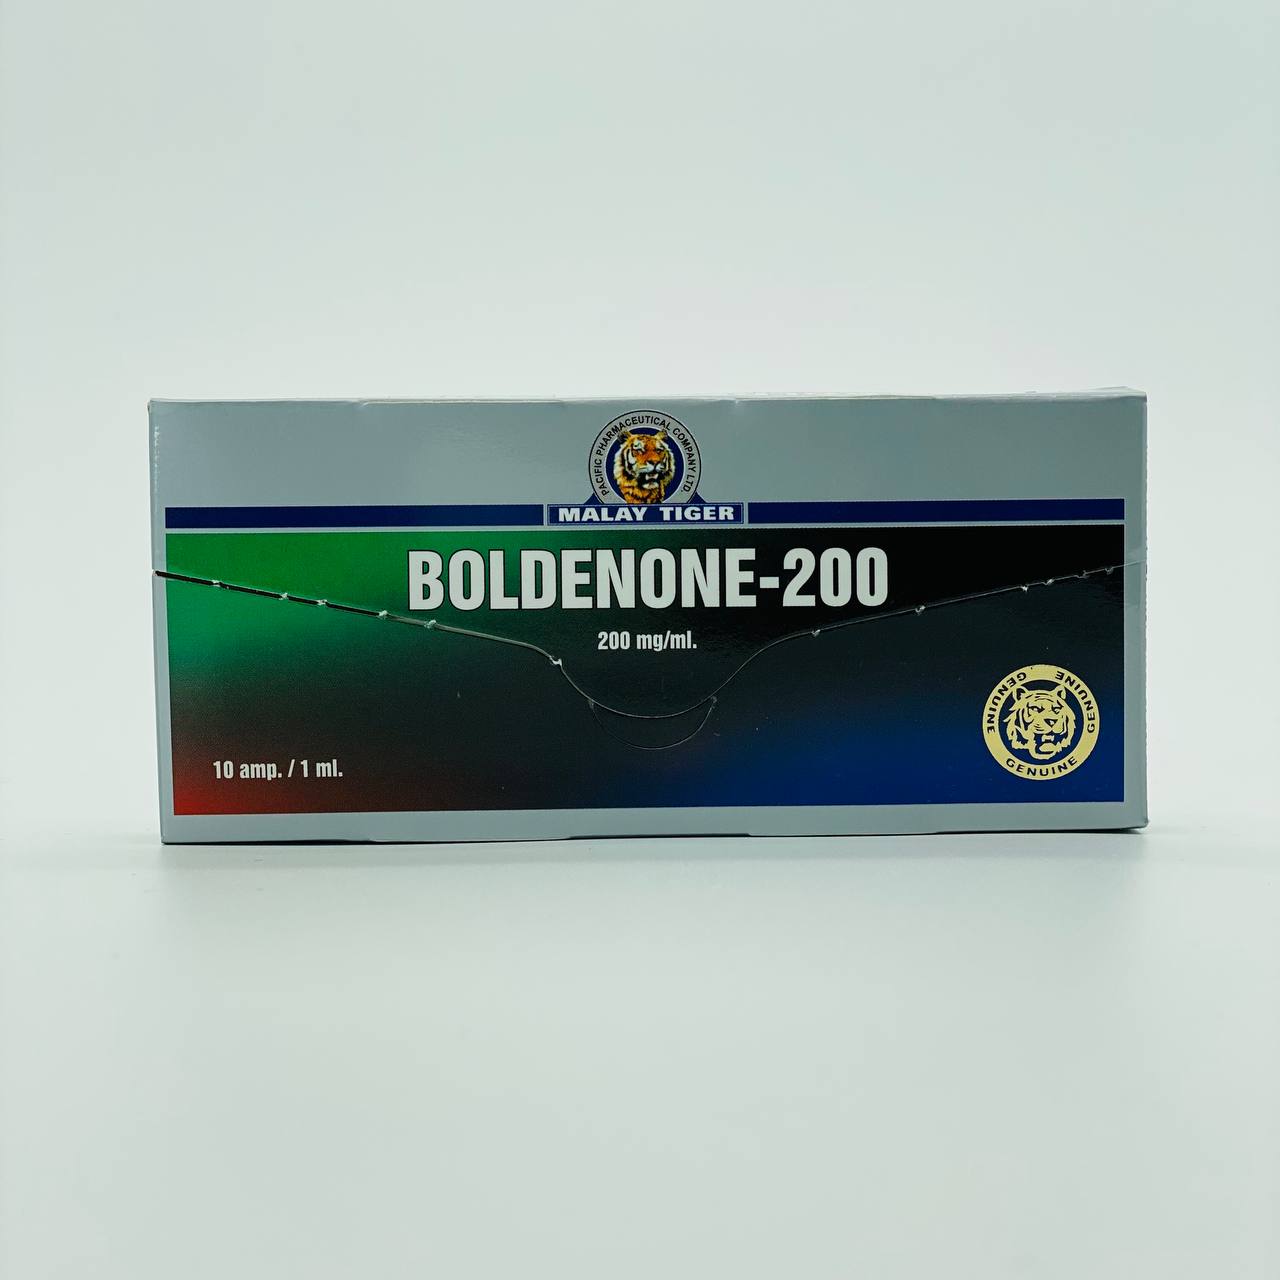 Boldenone – 200 200 mg Malay Tiger Boldenone